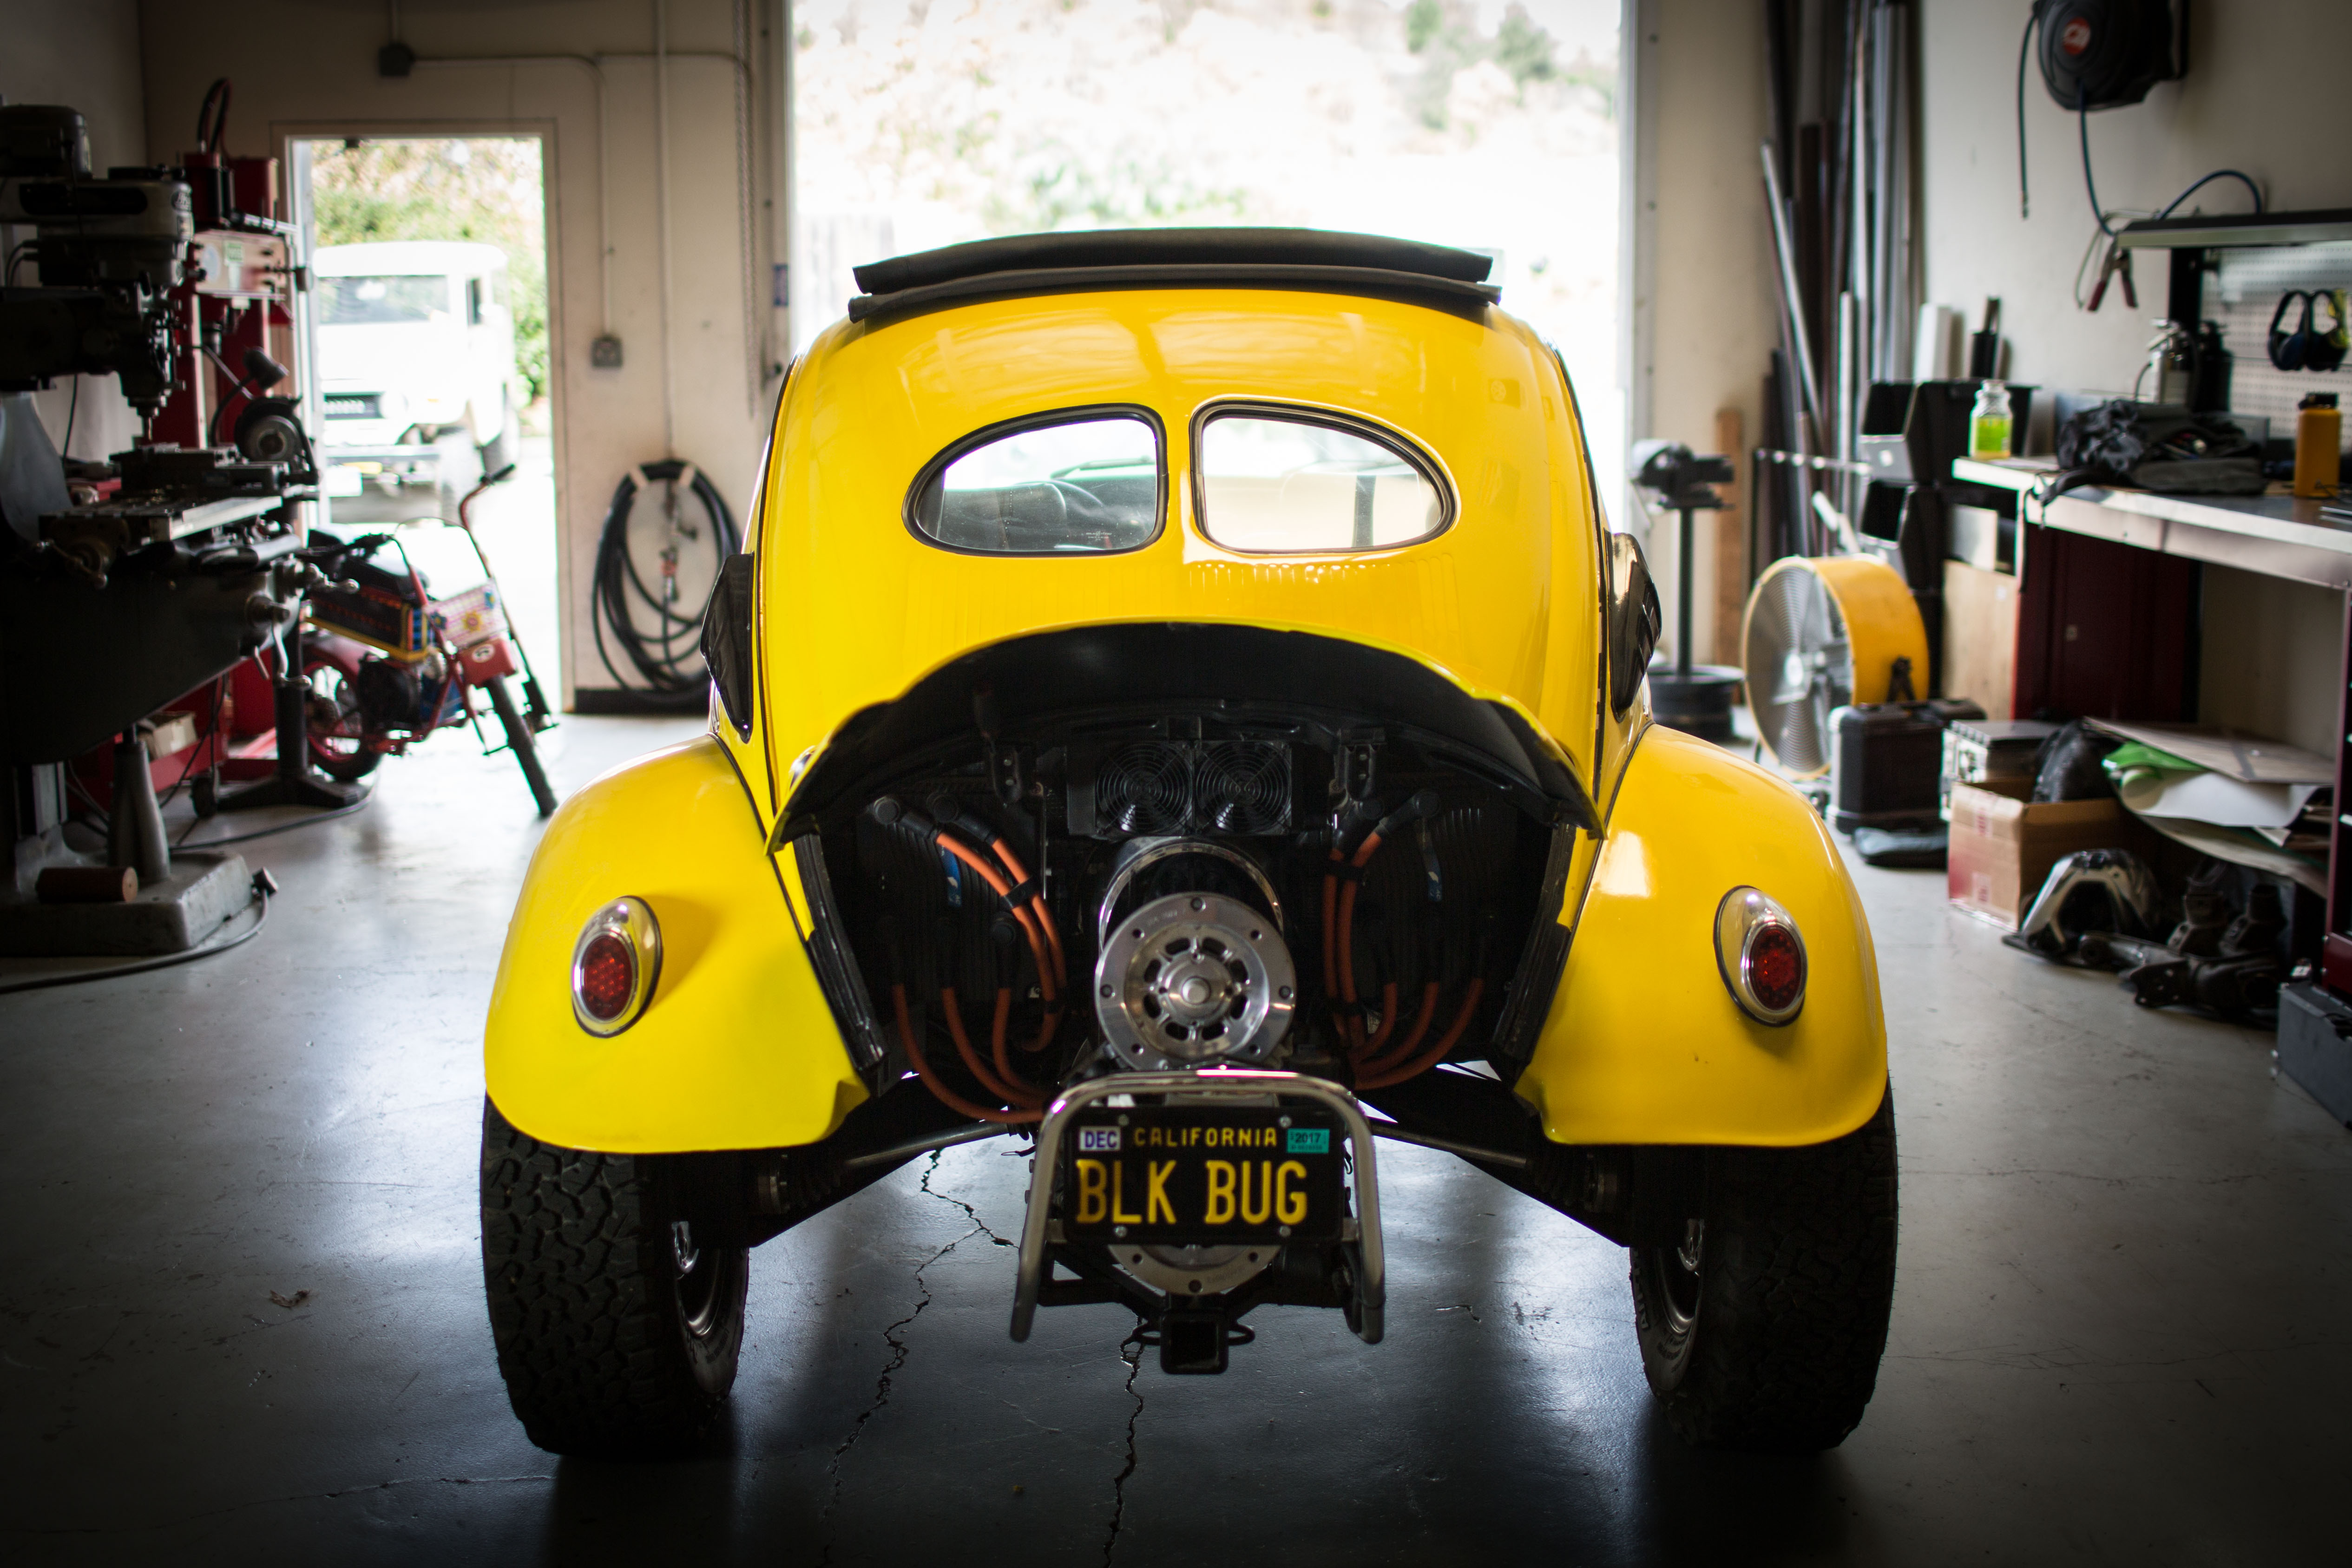 Meet the DIY Mechanics Retrofitting Classic Cars With Electric Motors